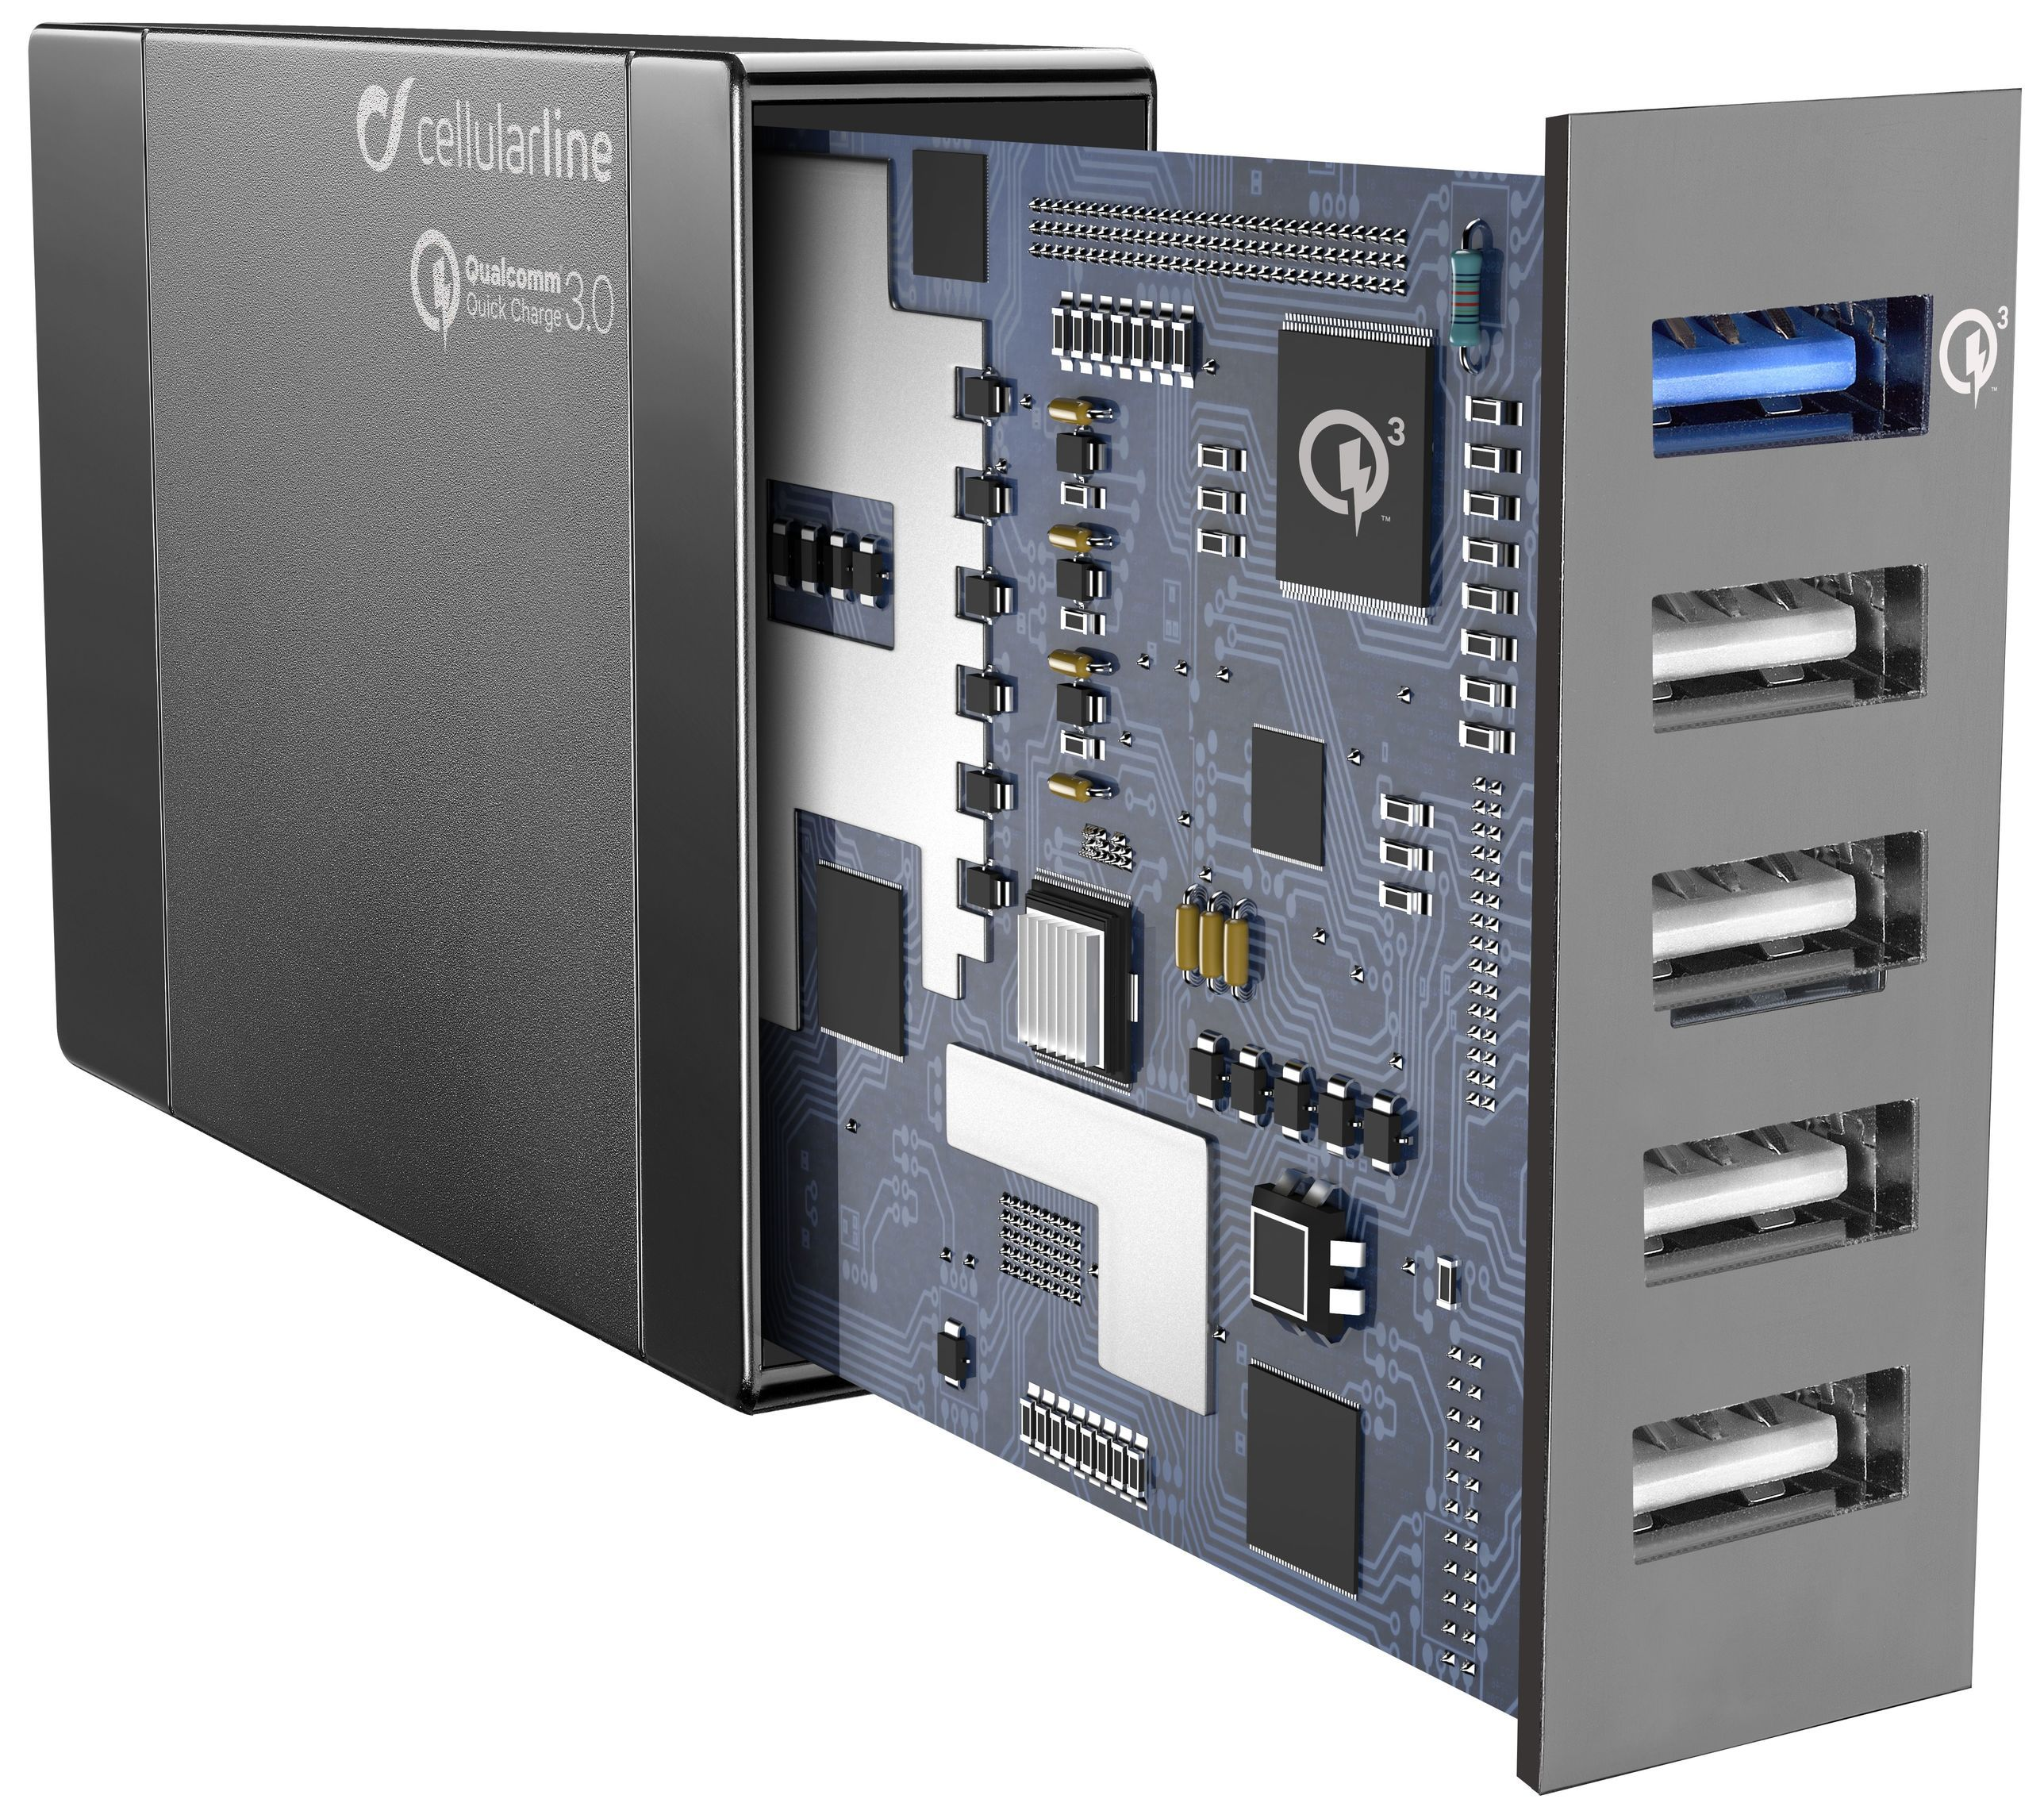 Univerzálna sieťová nabíjačka CellularLine Energy Station QC, 5x USB, Qualcomm Quick Charge 3.0, max 50W čierna